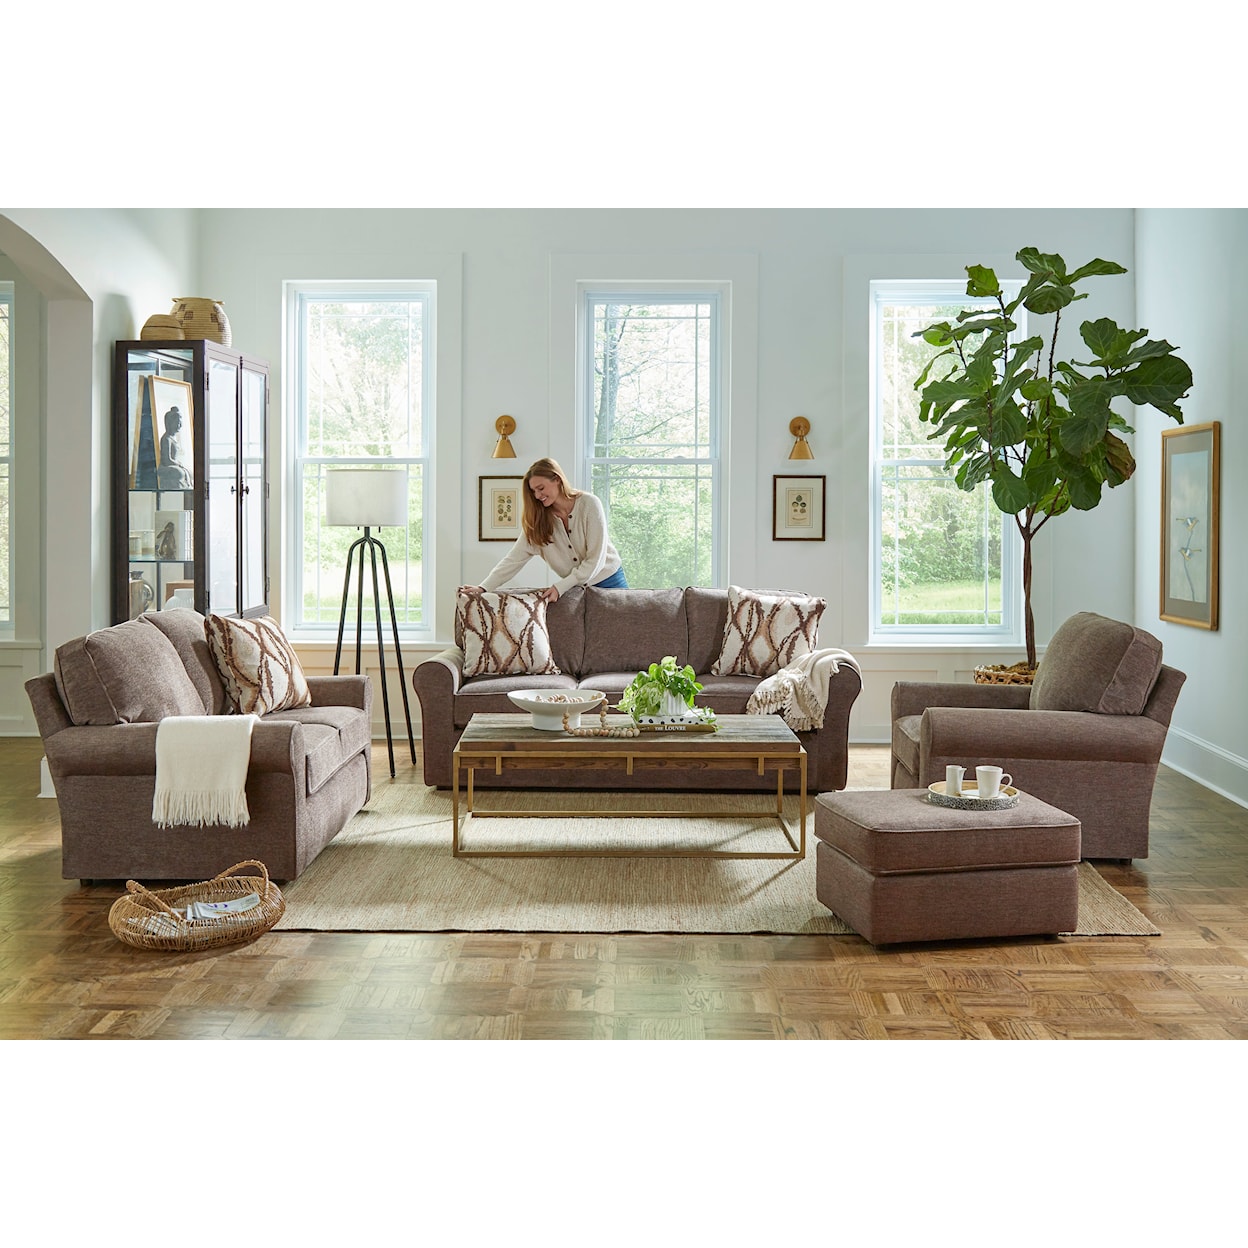 Best Home Furnishings Hanway Queen Sleeper Sofa w/ Memory Foam Mattress